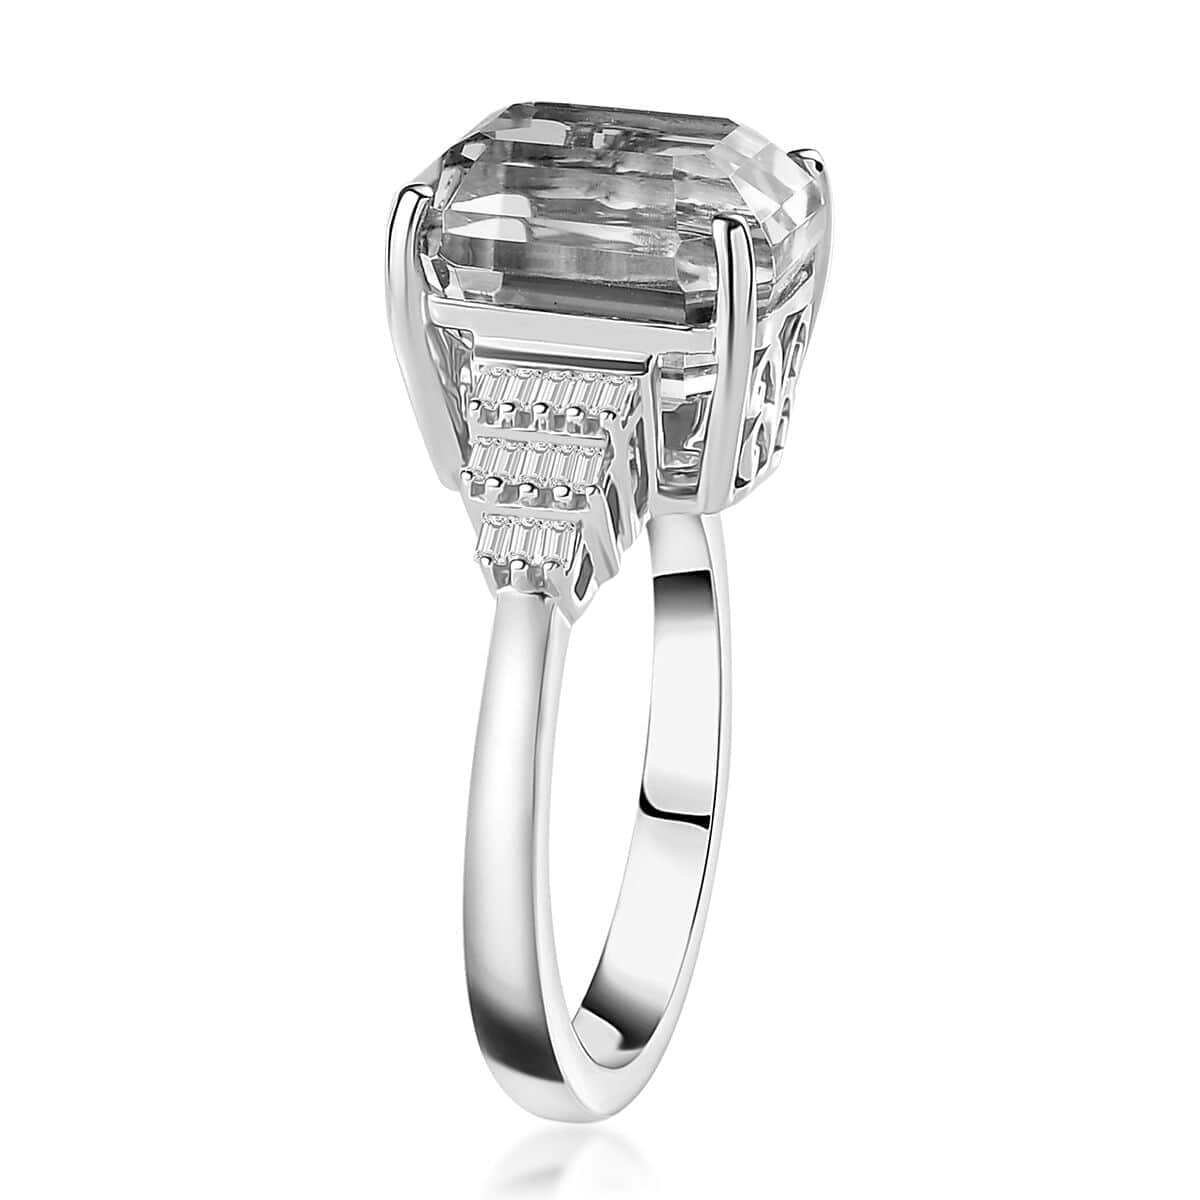 Luxoro 10K White Gold AAA Patroke Kunzite, Diamond (I2) (0.18 cts) Ring (Size 10.0) (4 g) 8.70 ctw image number 3